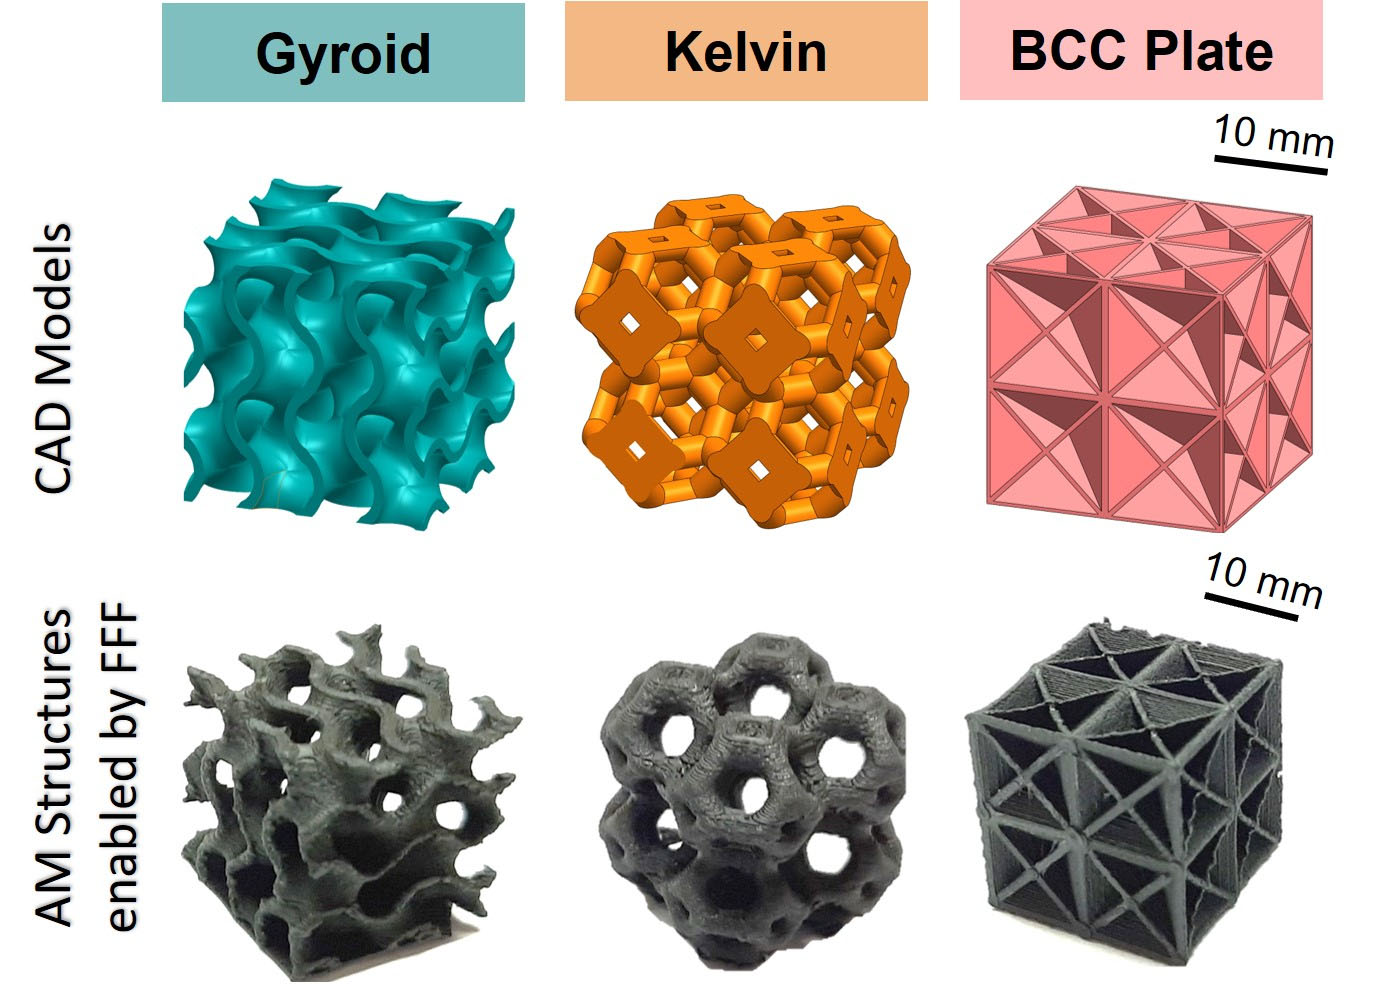 Design and fabrication of polypropylene random copolymer/multiwall carbon nanotube cellular structures